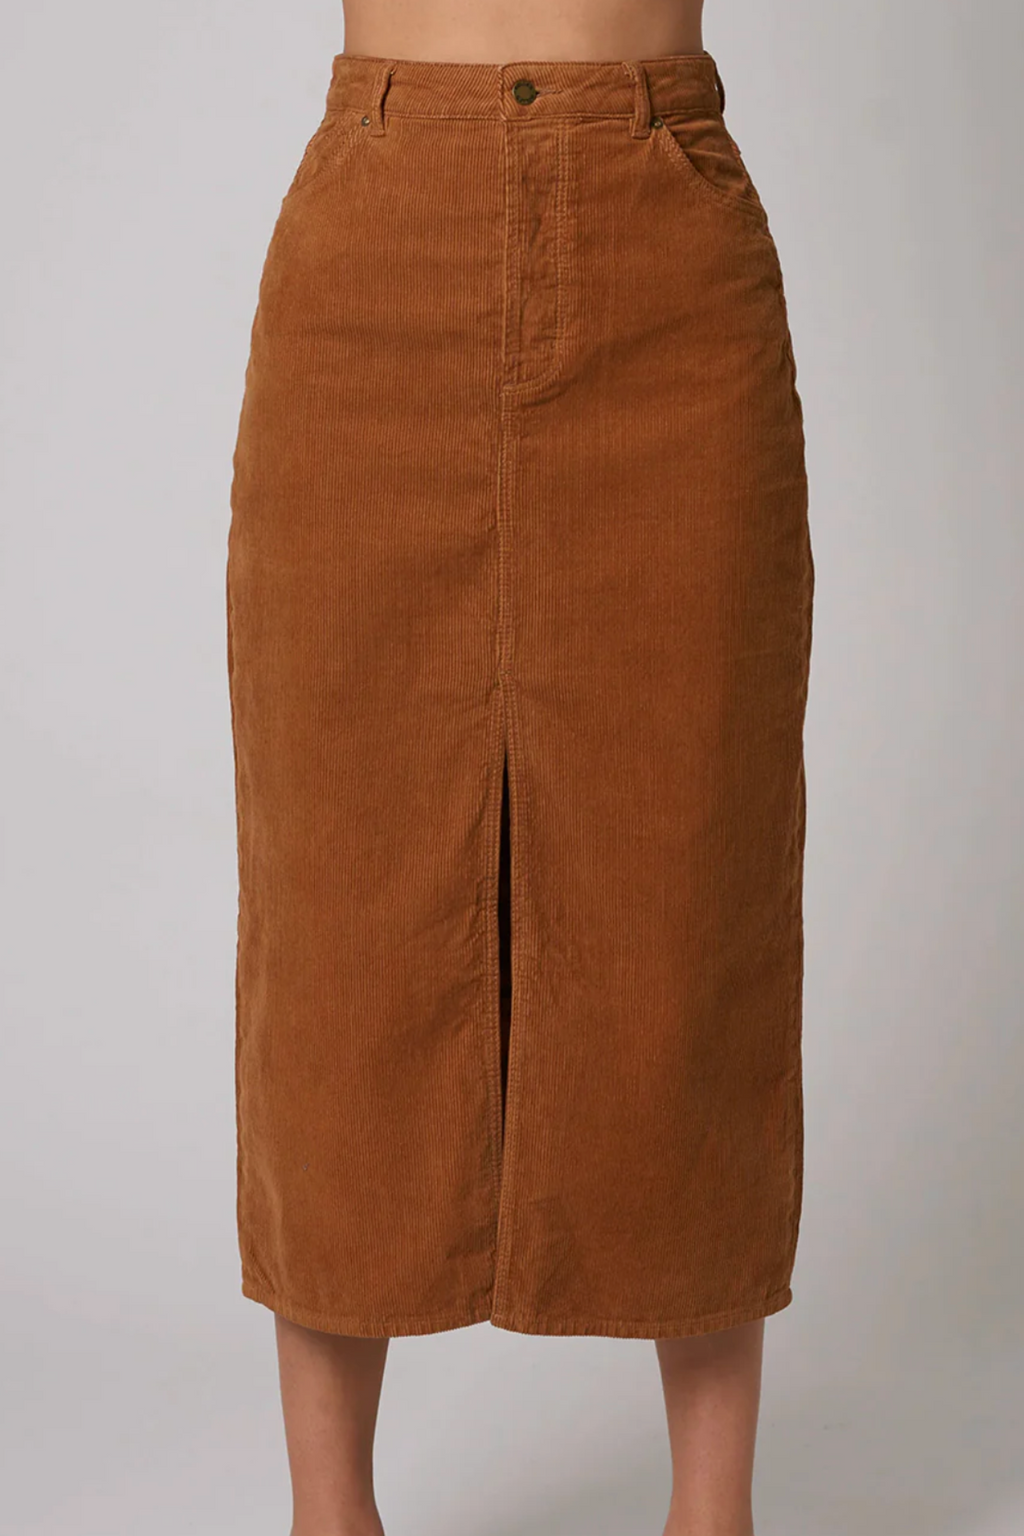 Chicago Skirt - Tan Cord